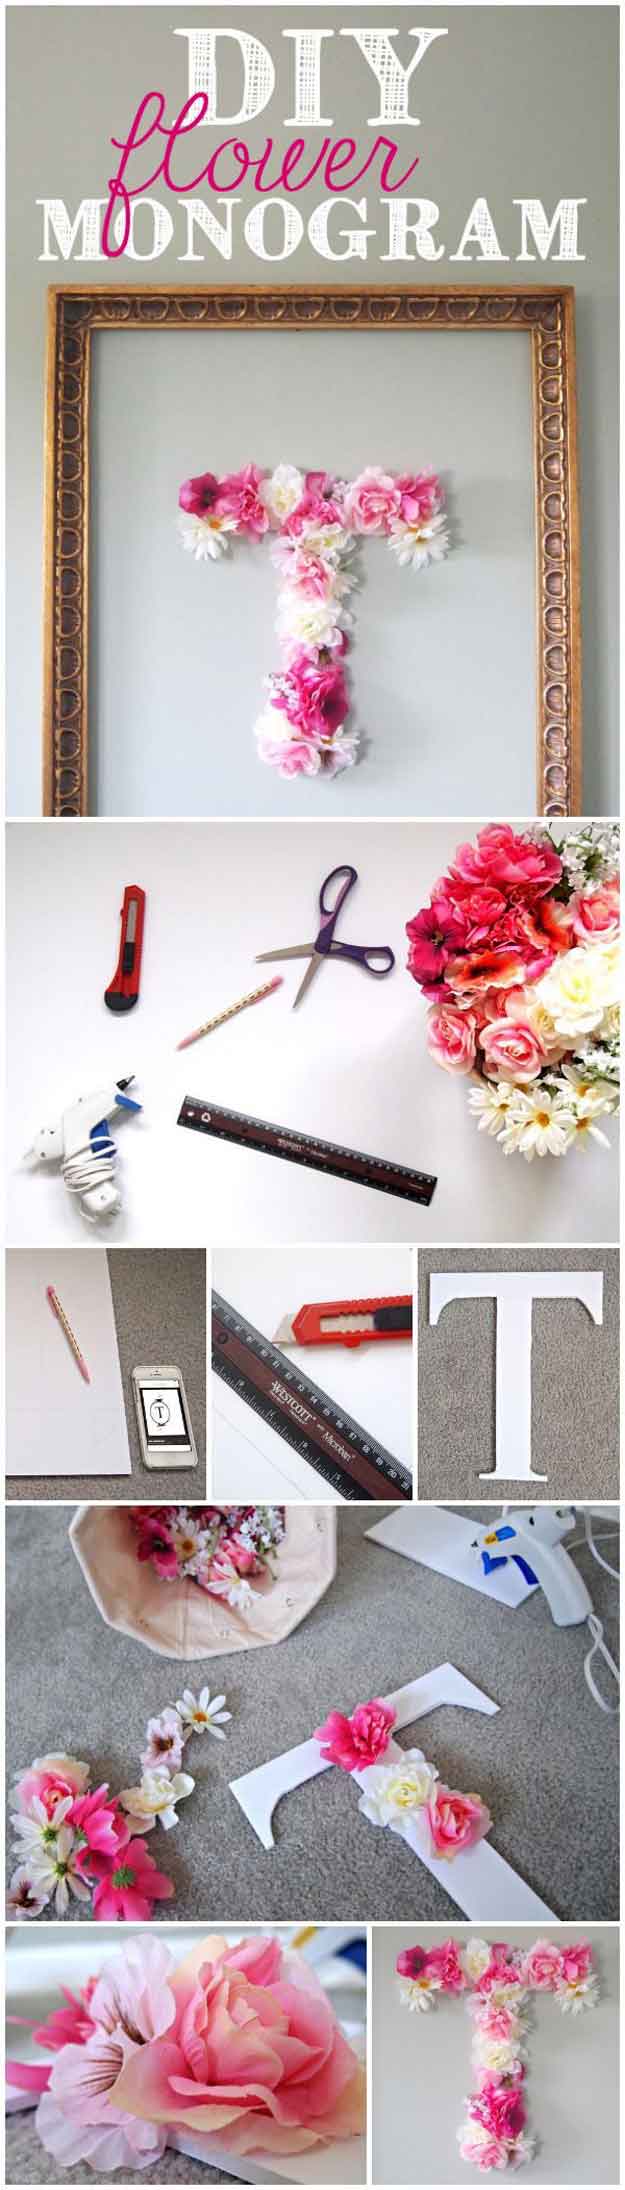 Cute DIY Room Decor Ideas for Teens - DIY Bedroom Projects for Teenagers - DIY Flower Monogram Craft